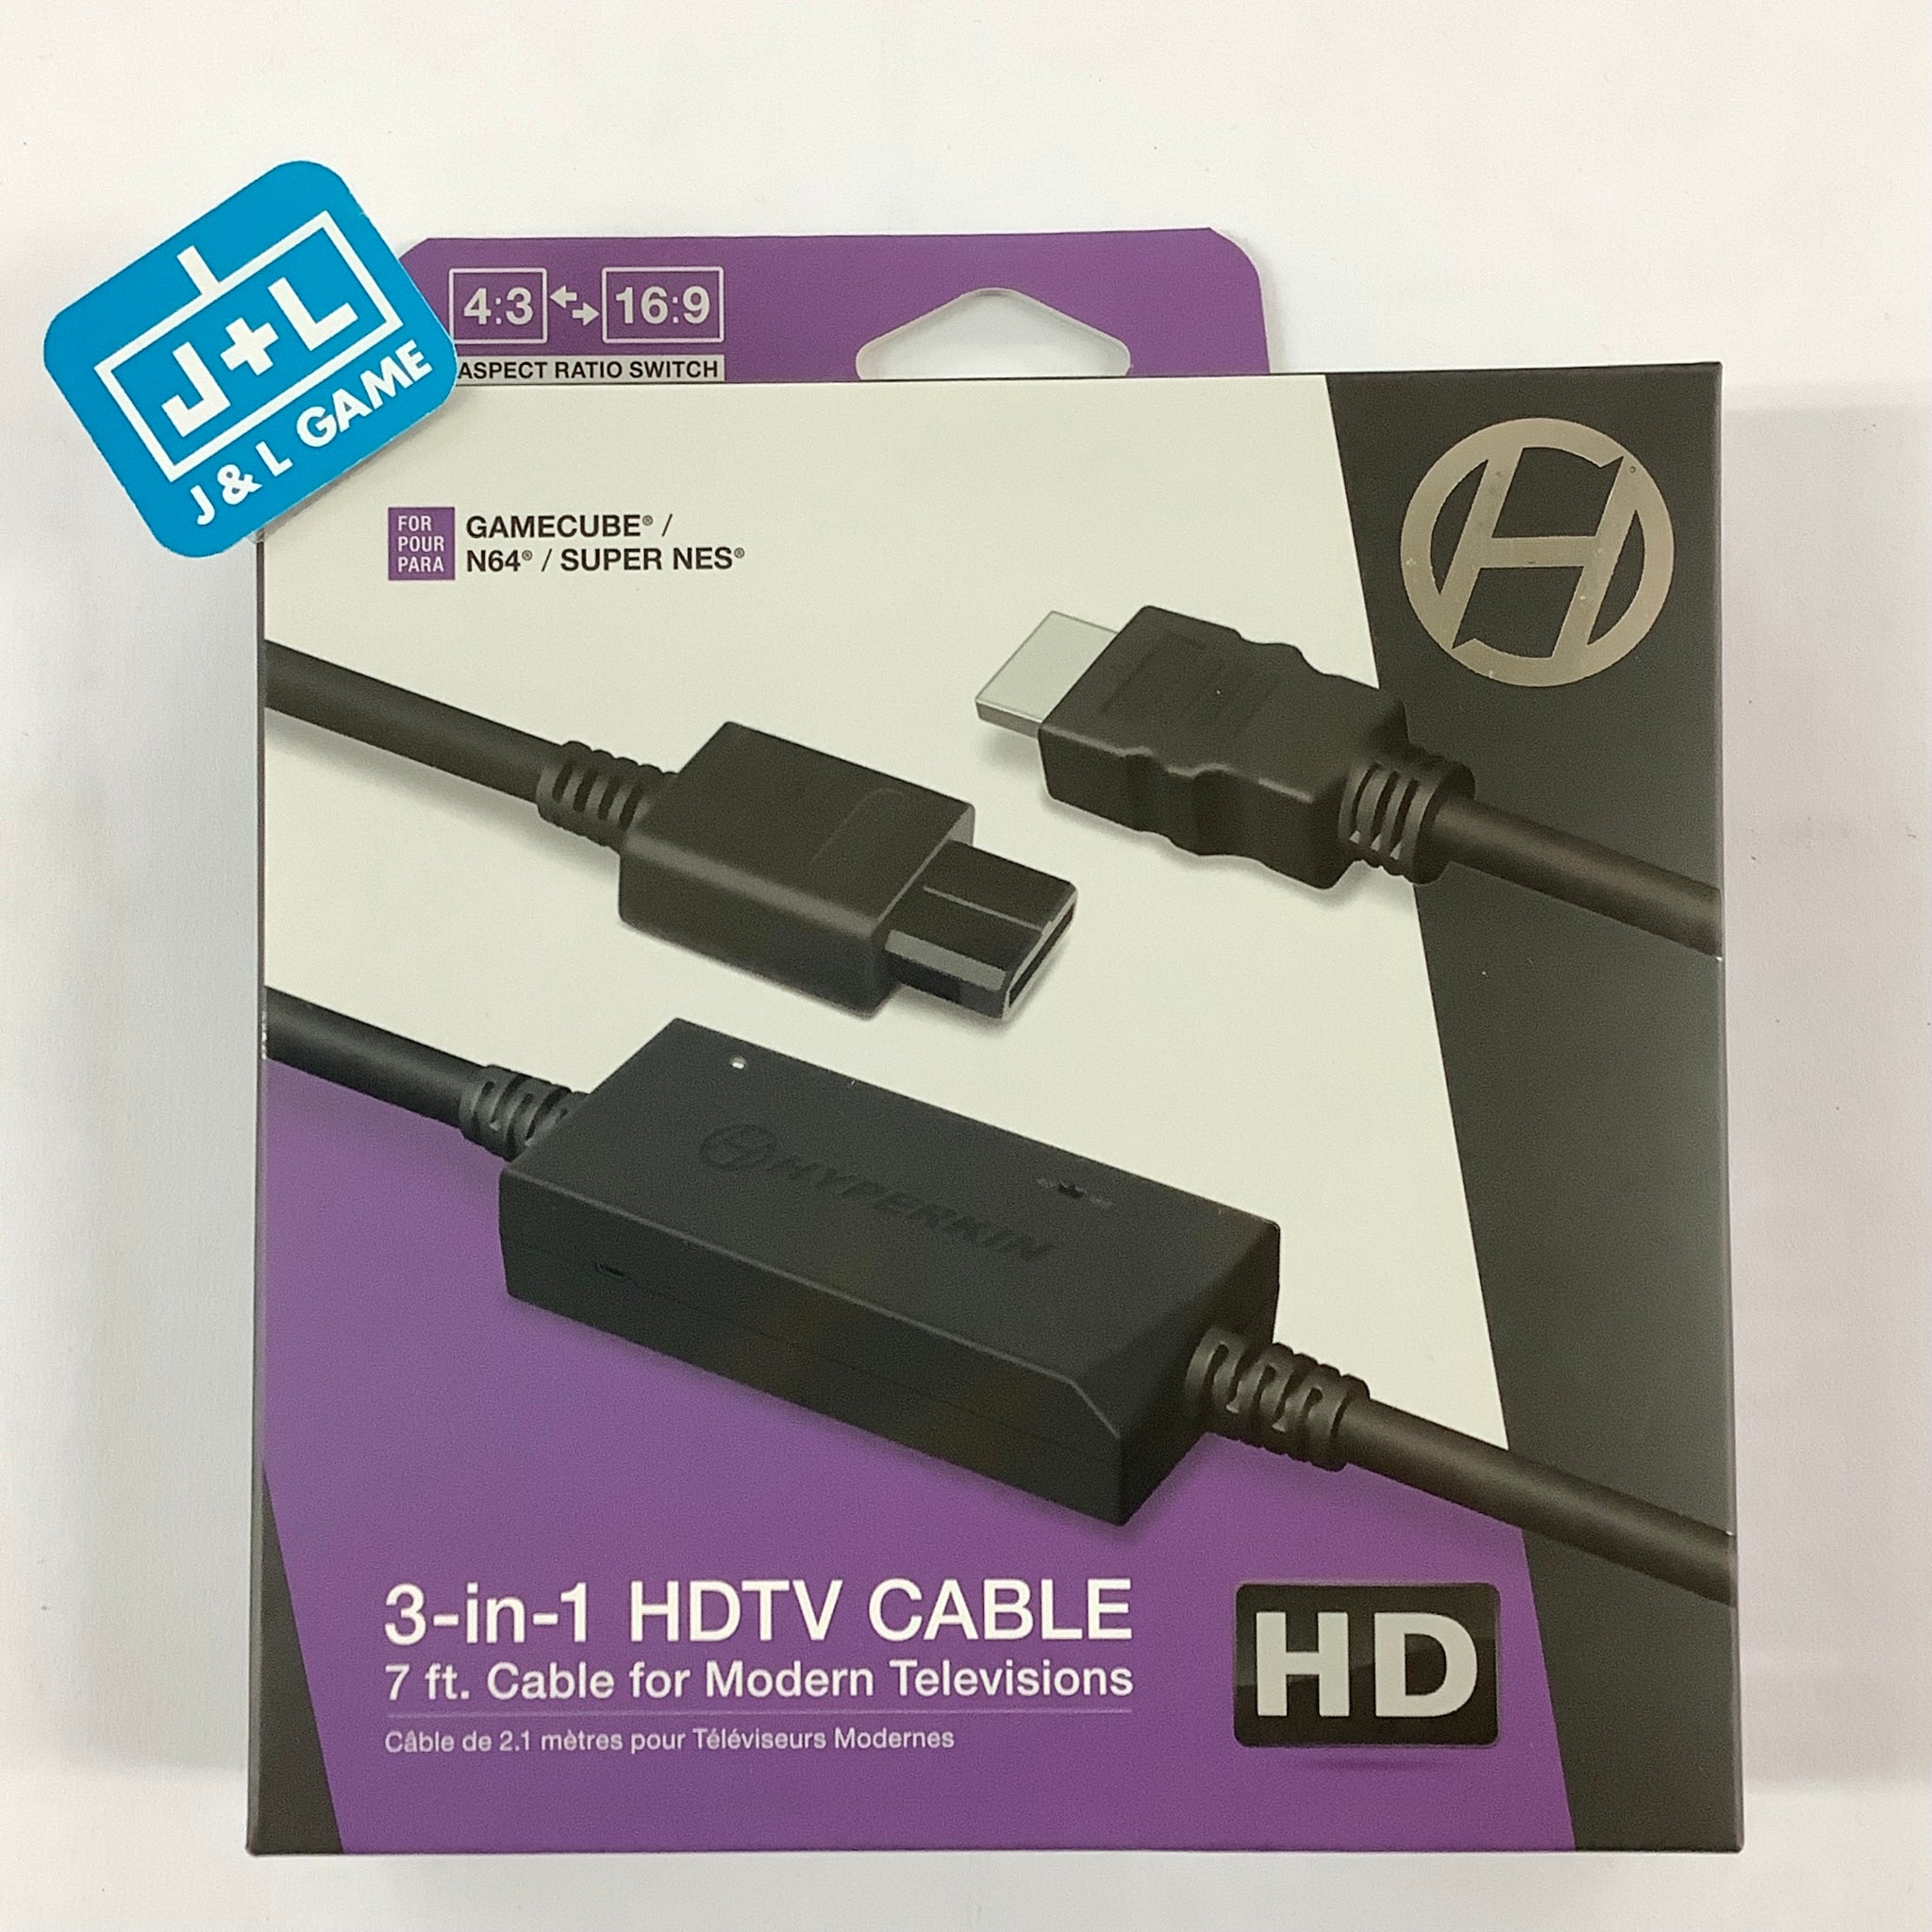 HD Cable - Hyperkin